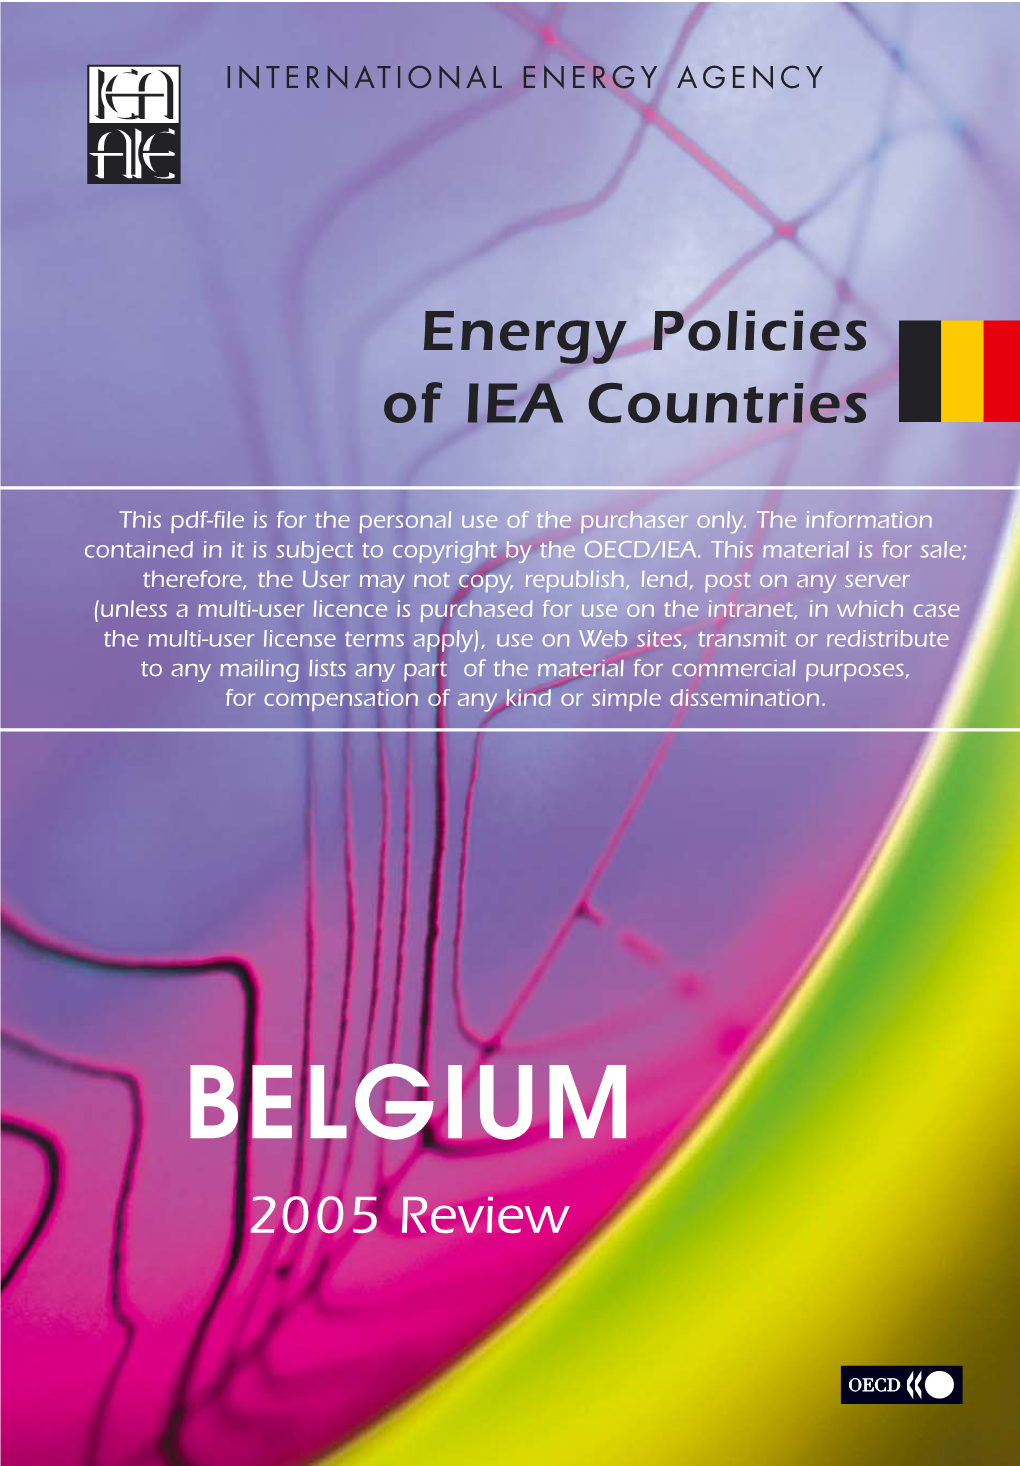 BELGIUM 2005 Review INTERNATIONAL ENERGY AGENCY